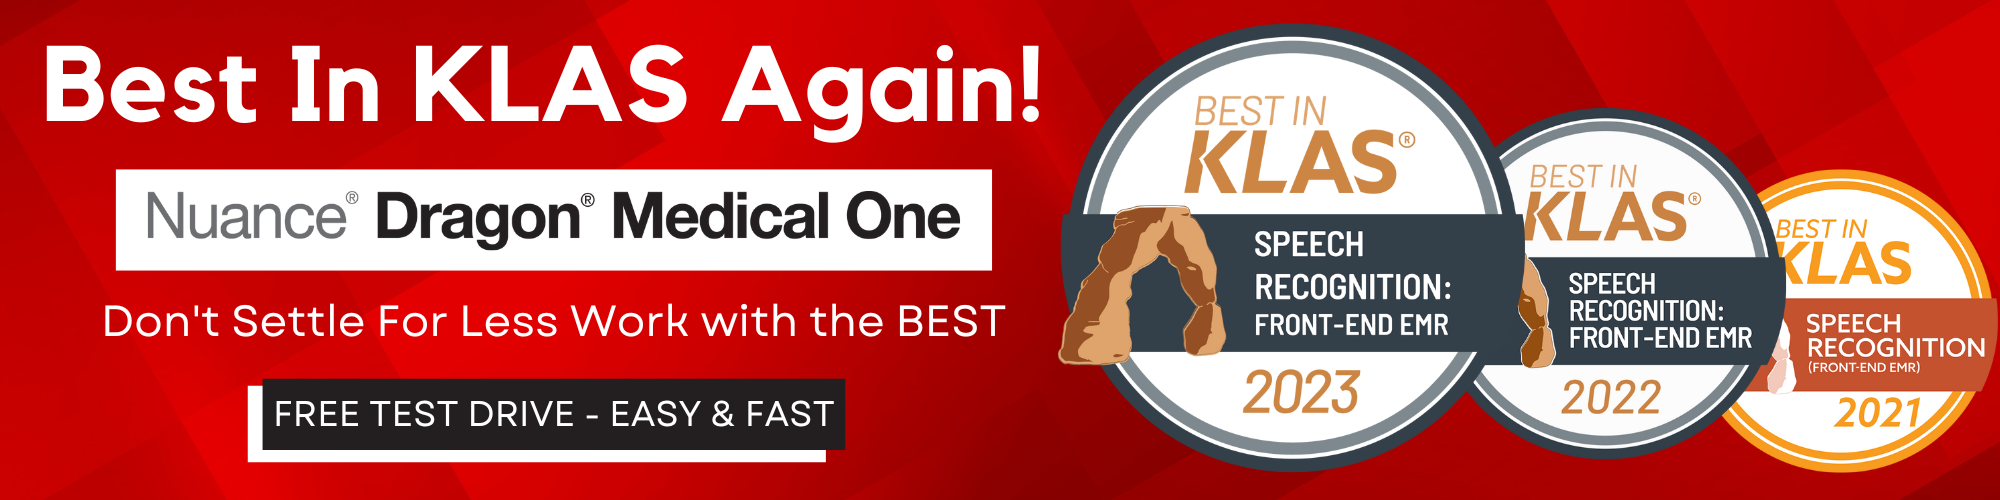 Best In KLAS Again! Front-End EMR Speech Recognition